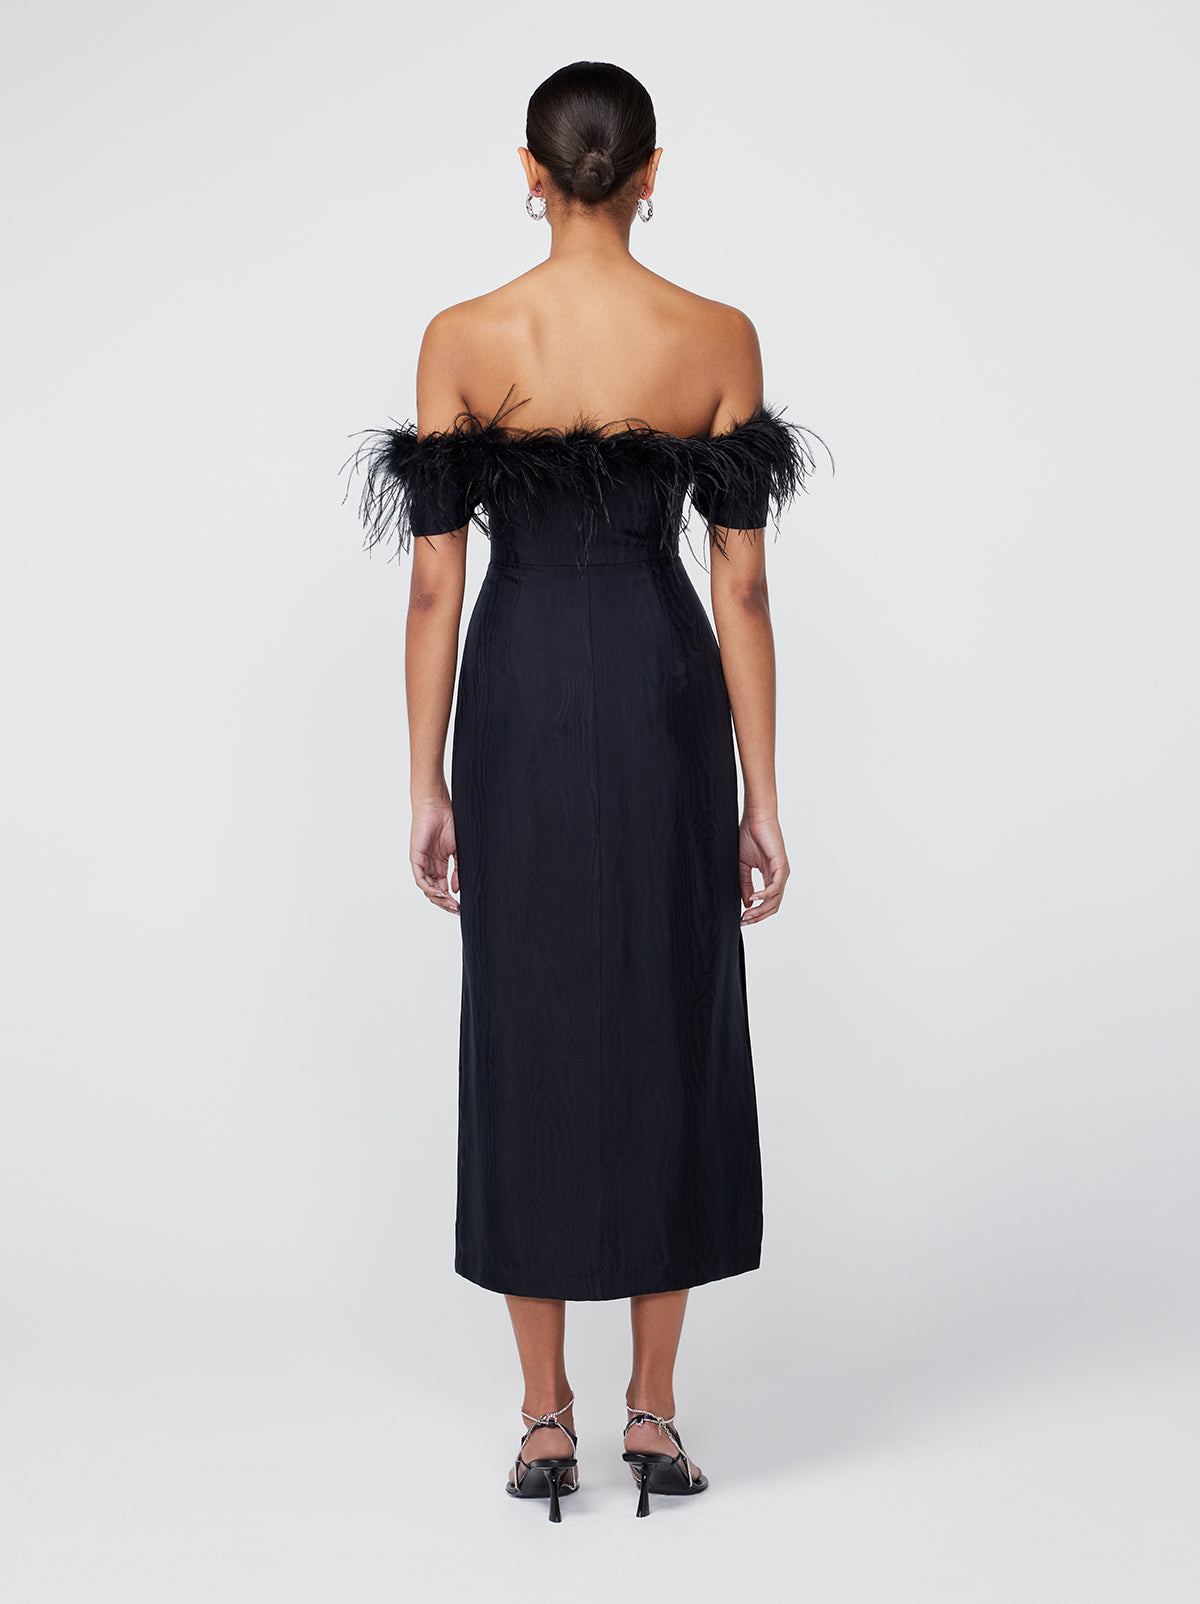 Vivien Black Feather Midi Dress By KITRI Studio